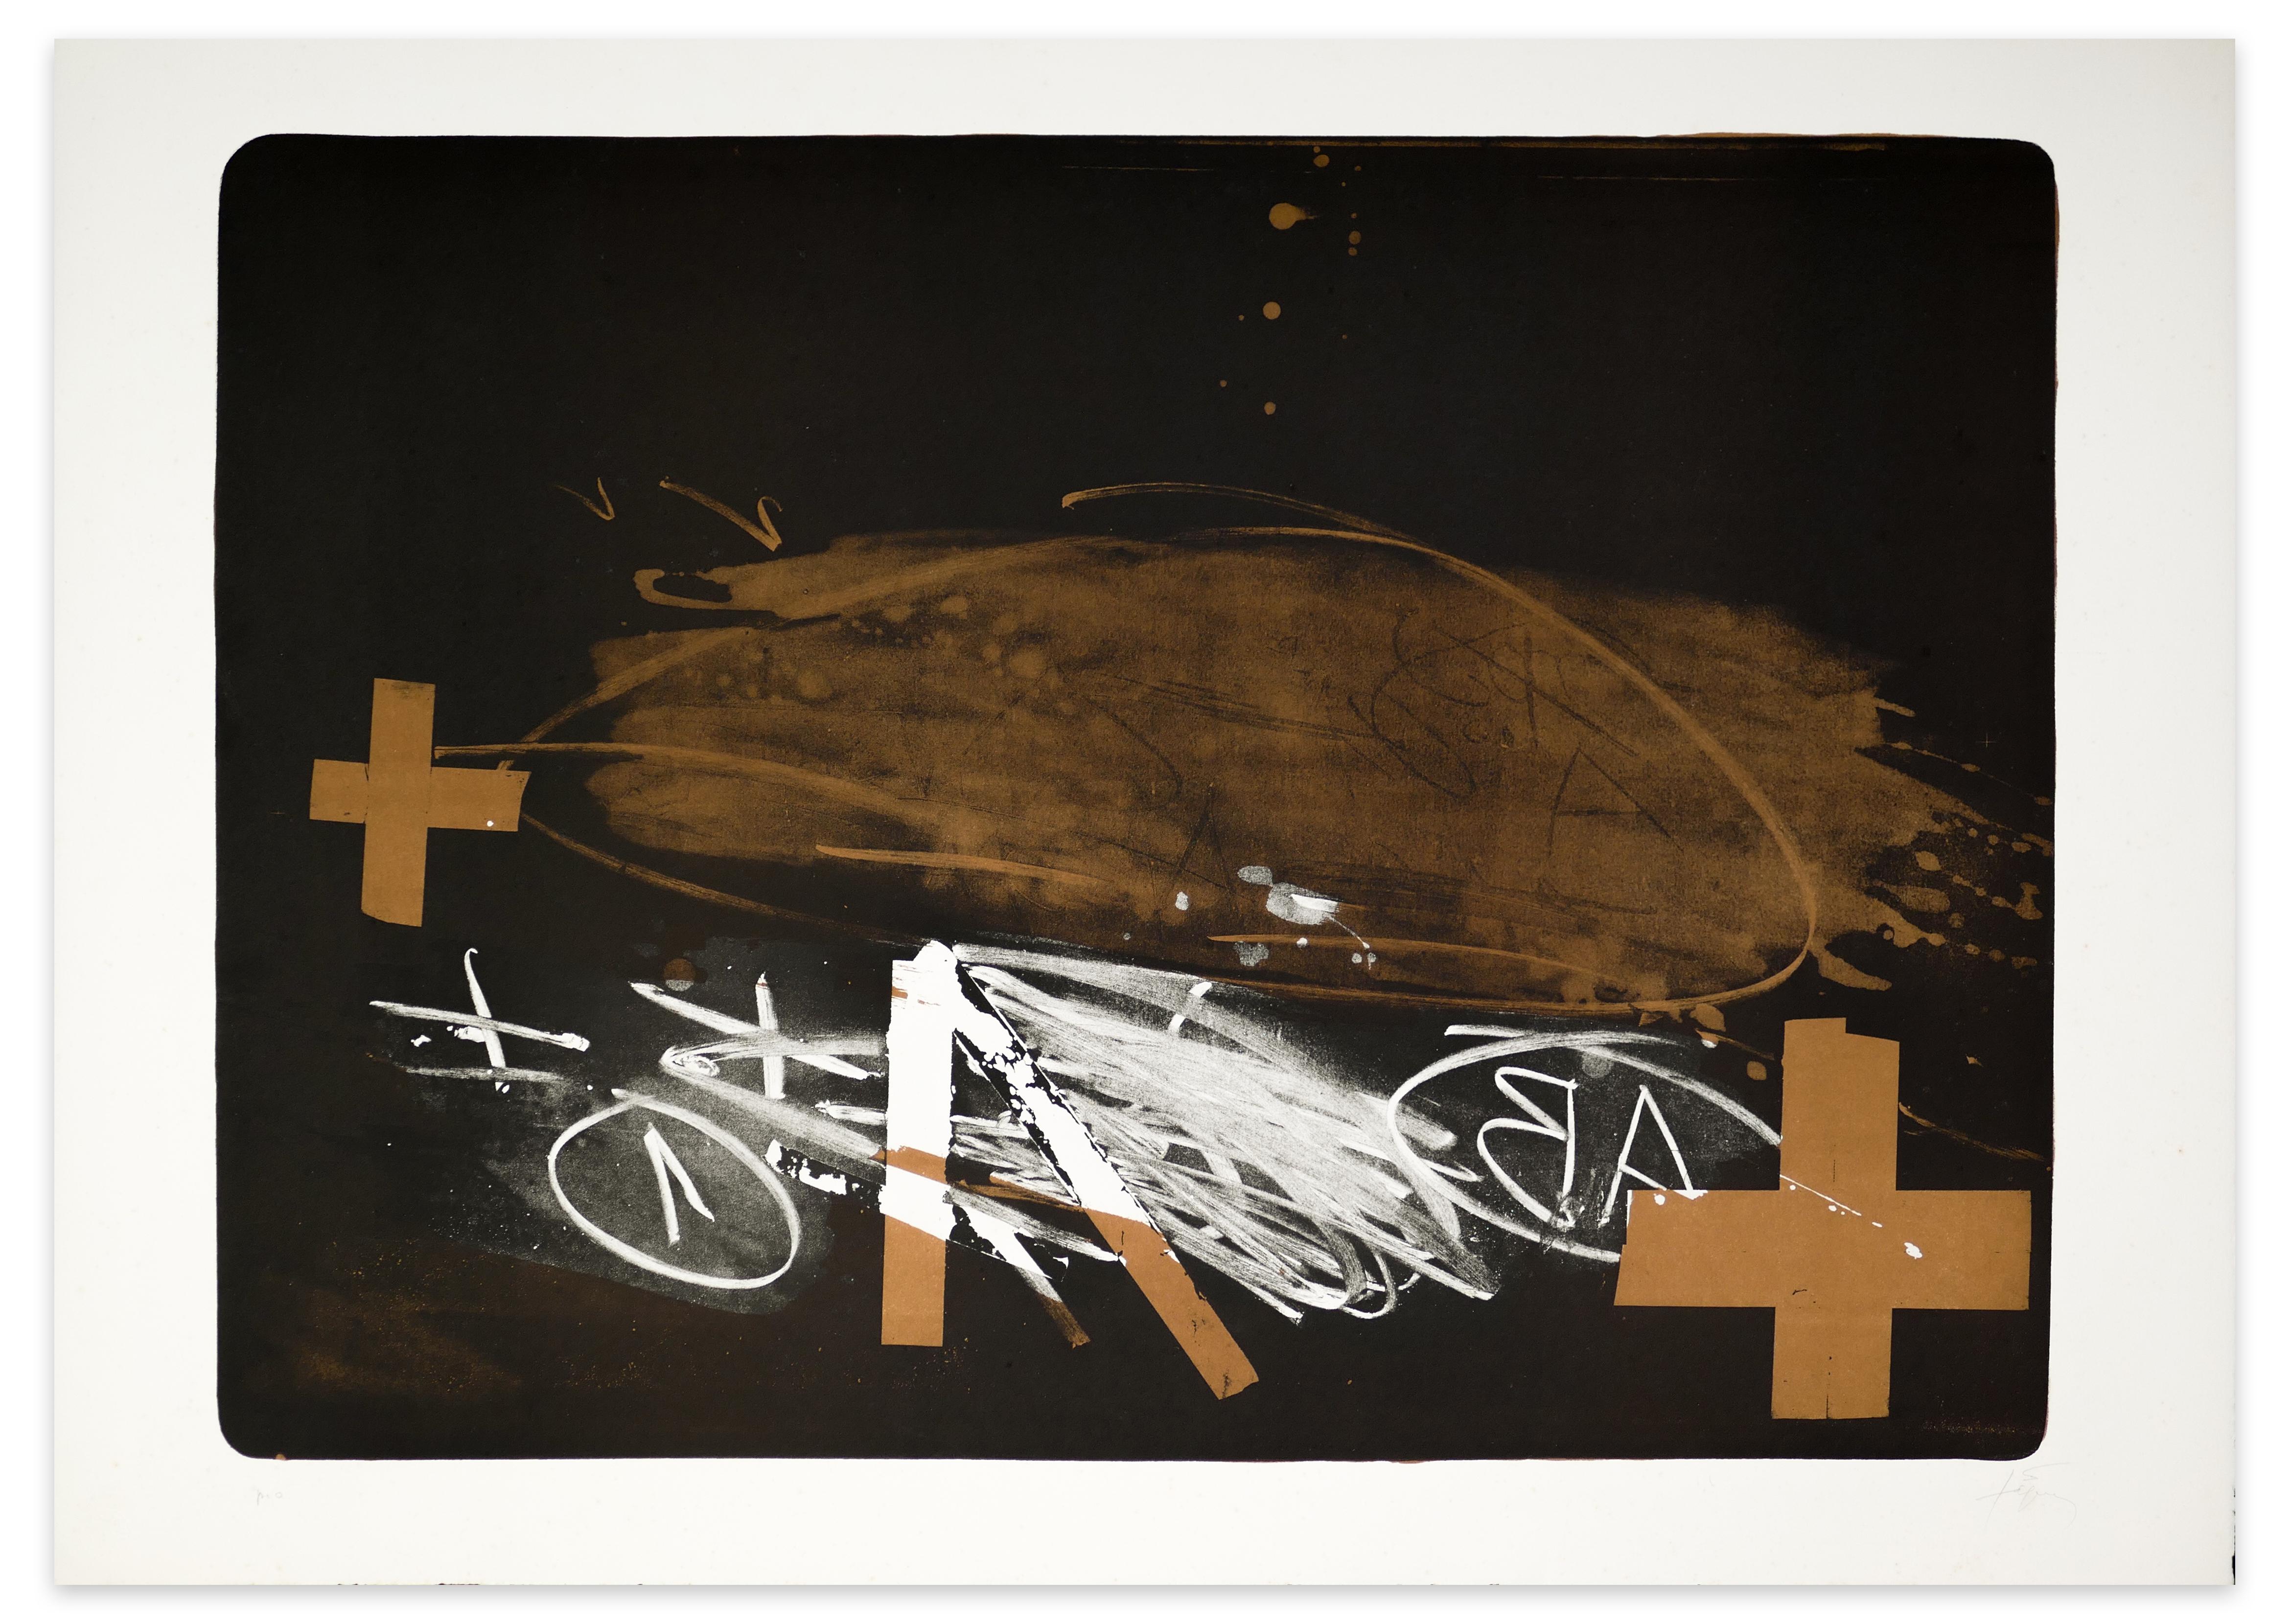 Antoni Tàpies Abstract Print - A Effacé - Original Lithograph by Antoni Tapies - 1976